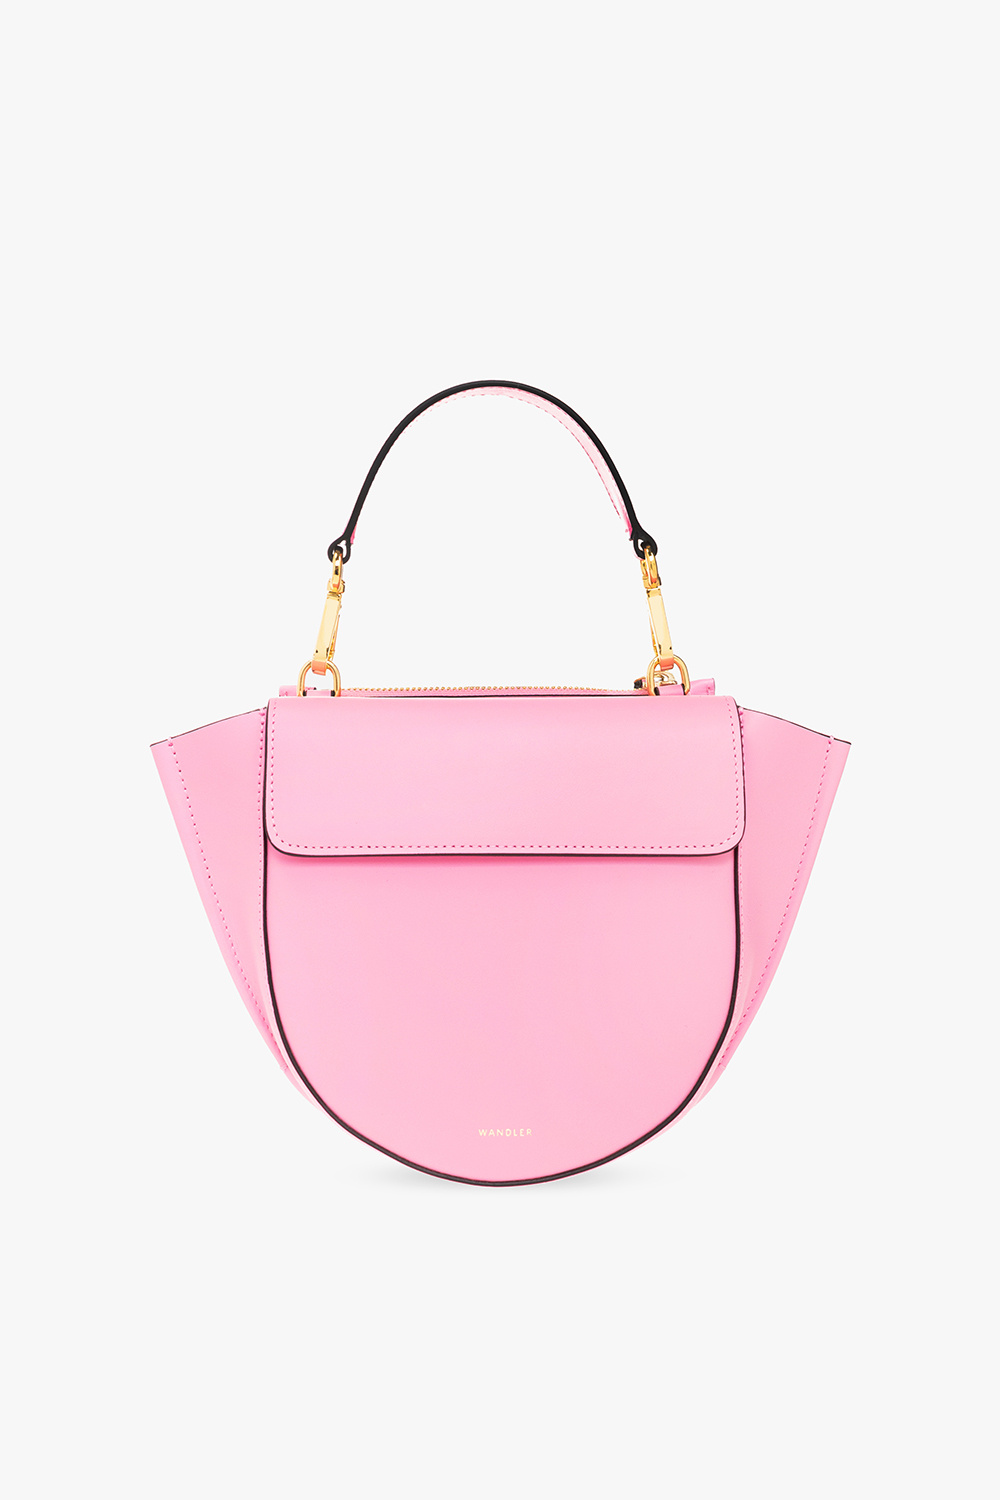 Wandler ‘Hortensia Mini’ shoulder new bag